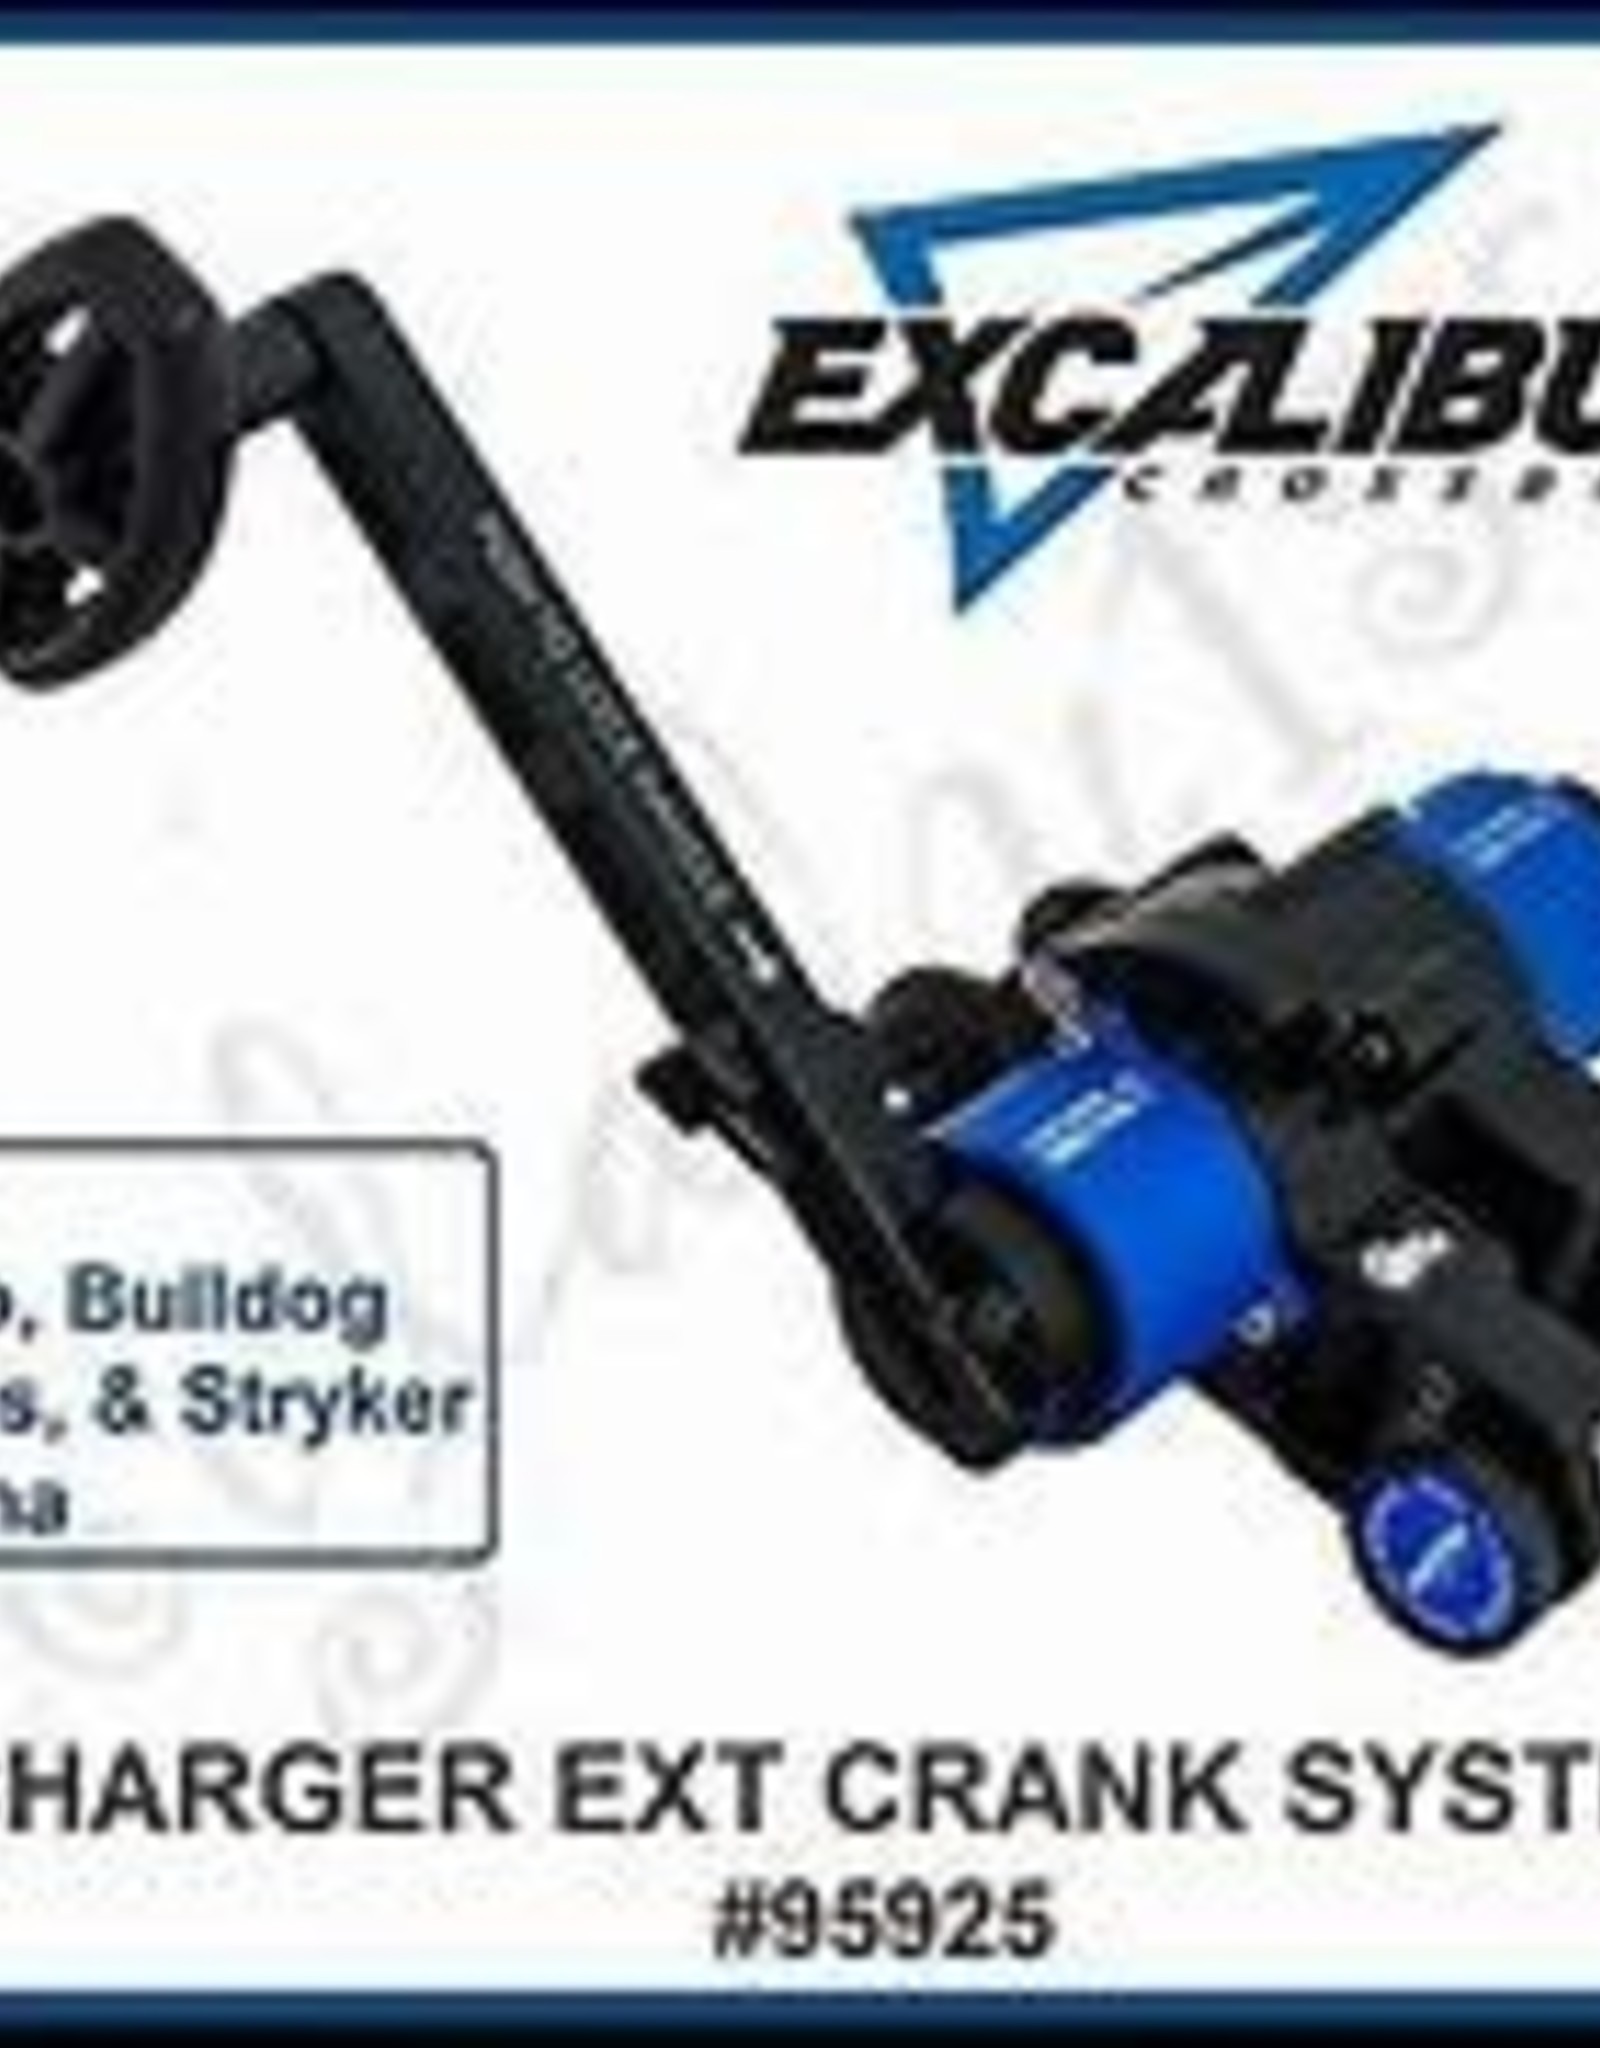 Excalibur Charger EXT Fits Micro, Bulldog, and Katana